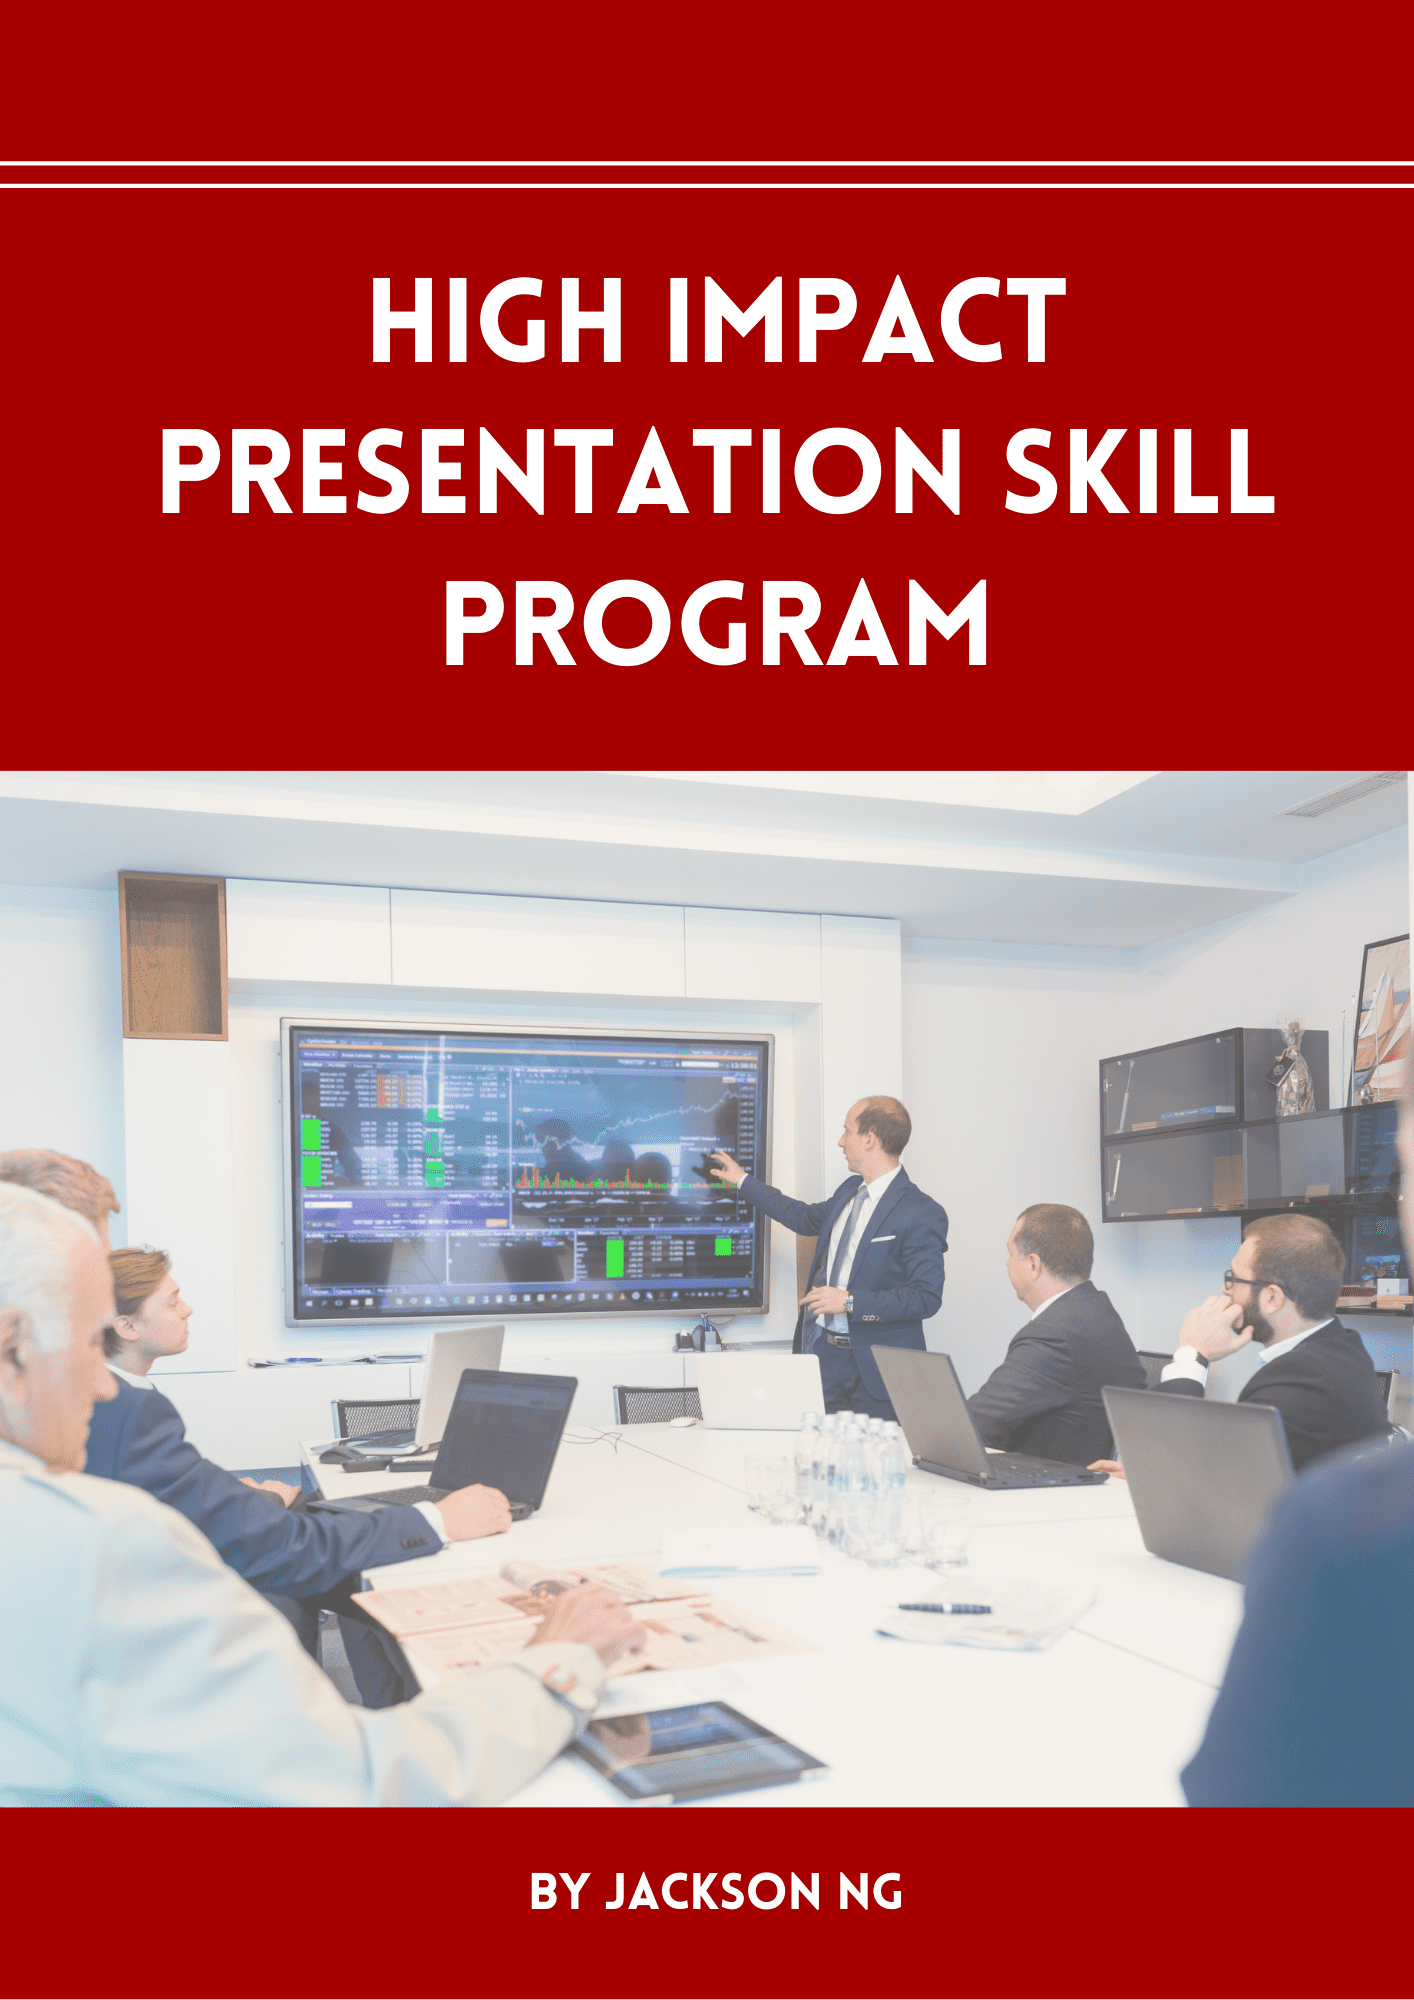 Non Certification Programs - High Impact Presentation Skill Program